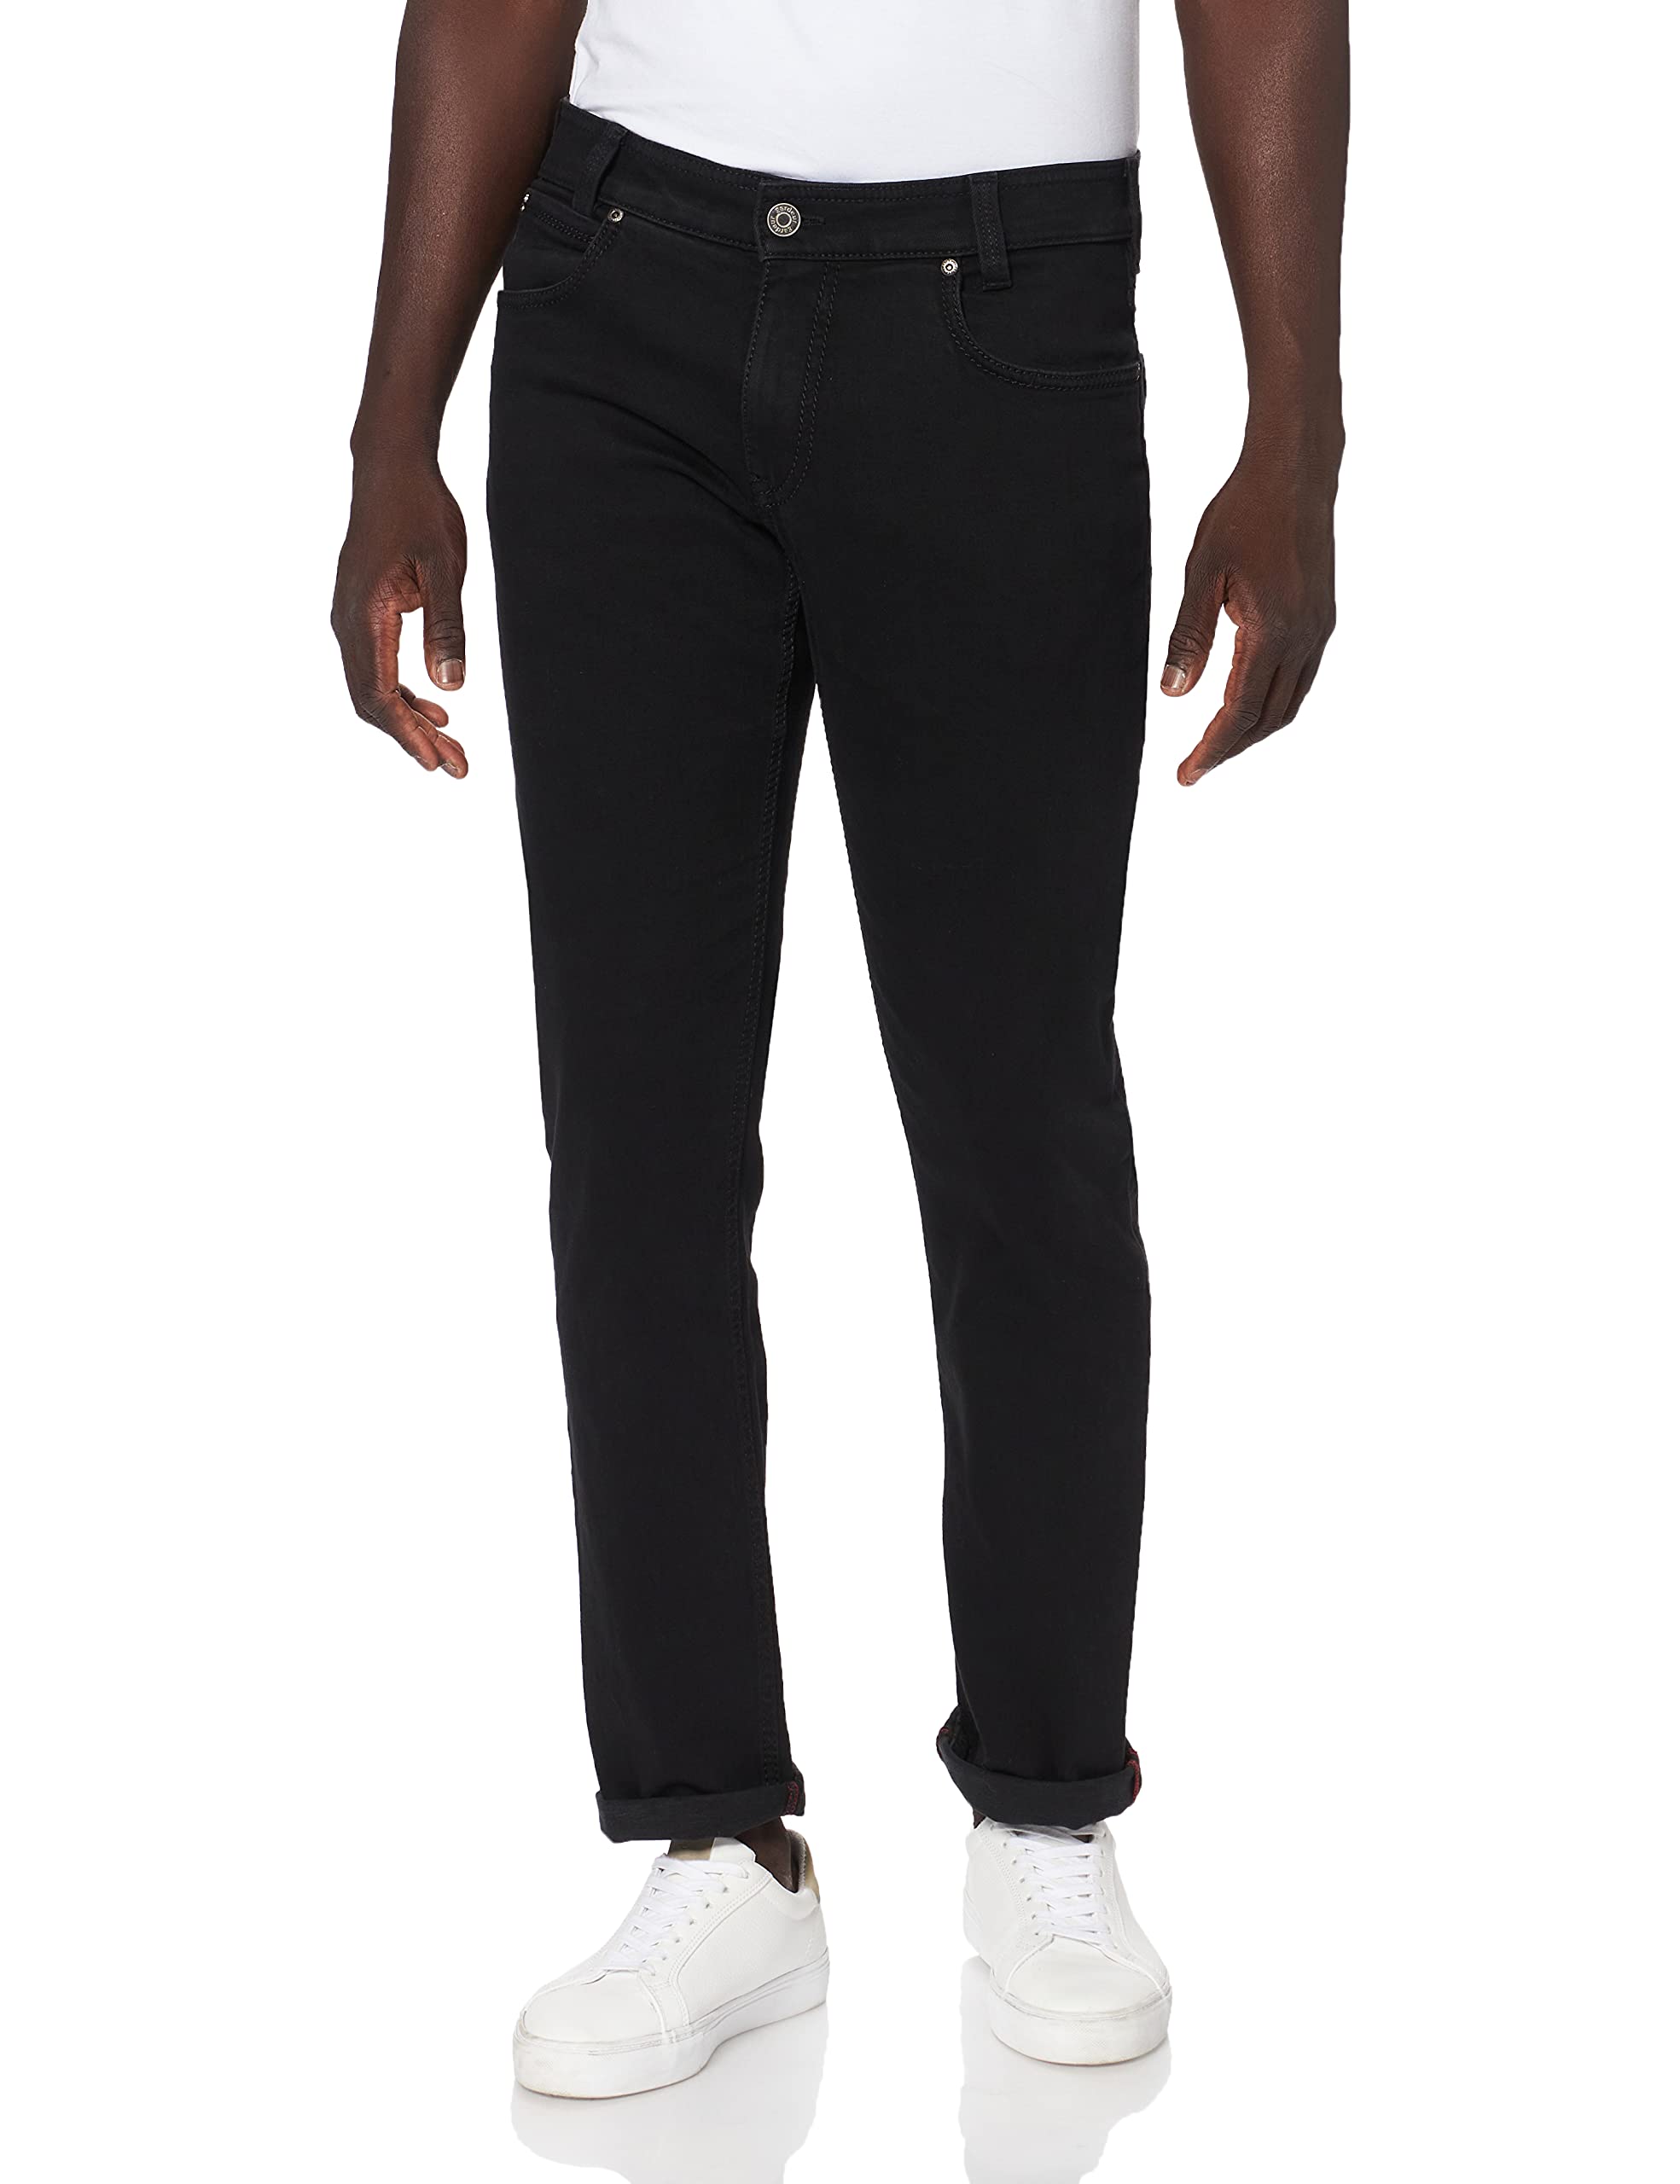 Atelier GARDEUR Herren Batu Comfort Stretch Jeans, Black/Black 799, 34W / 34L